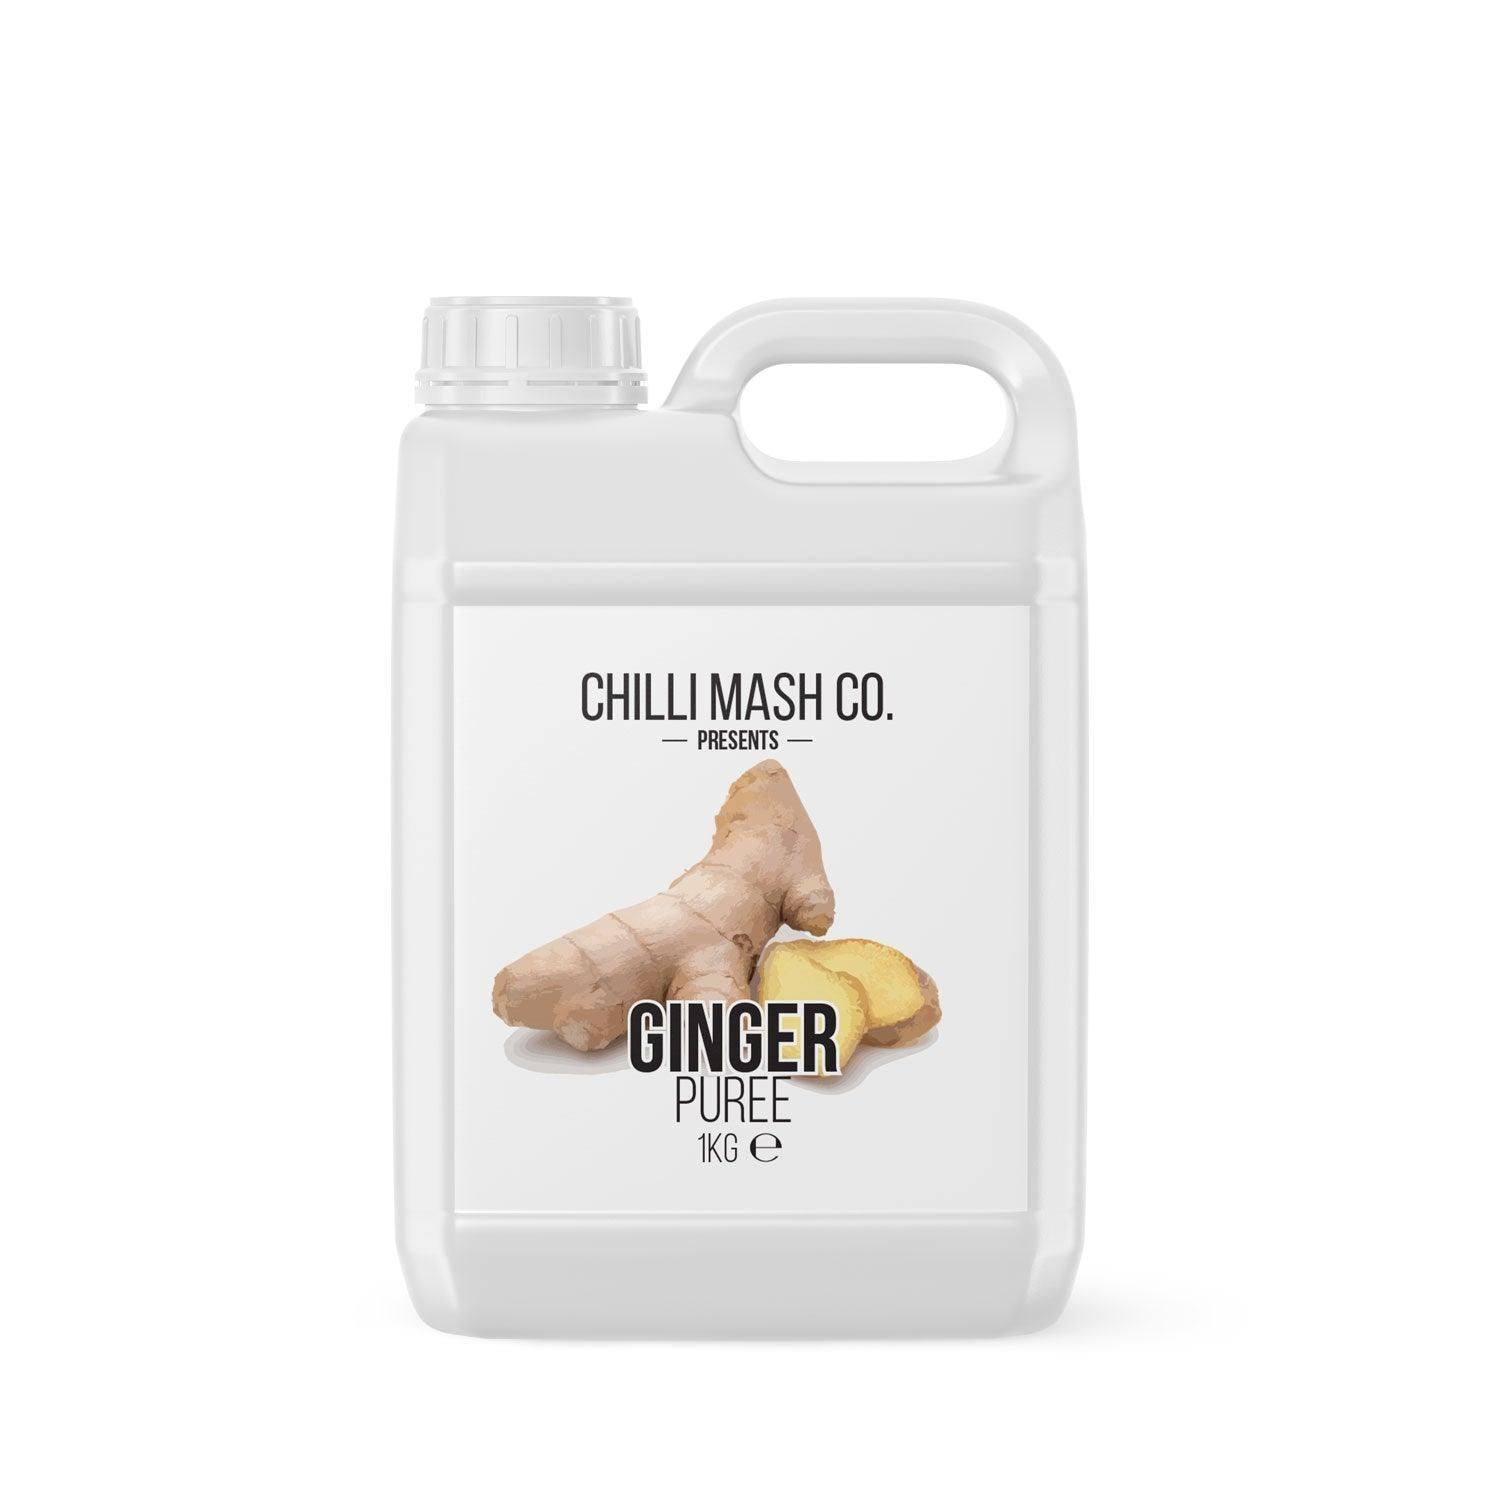 Ginger Puree | 1kg | Chilli Mash Co. - One Stop Chilli Shop